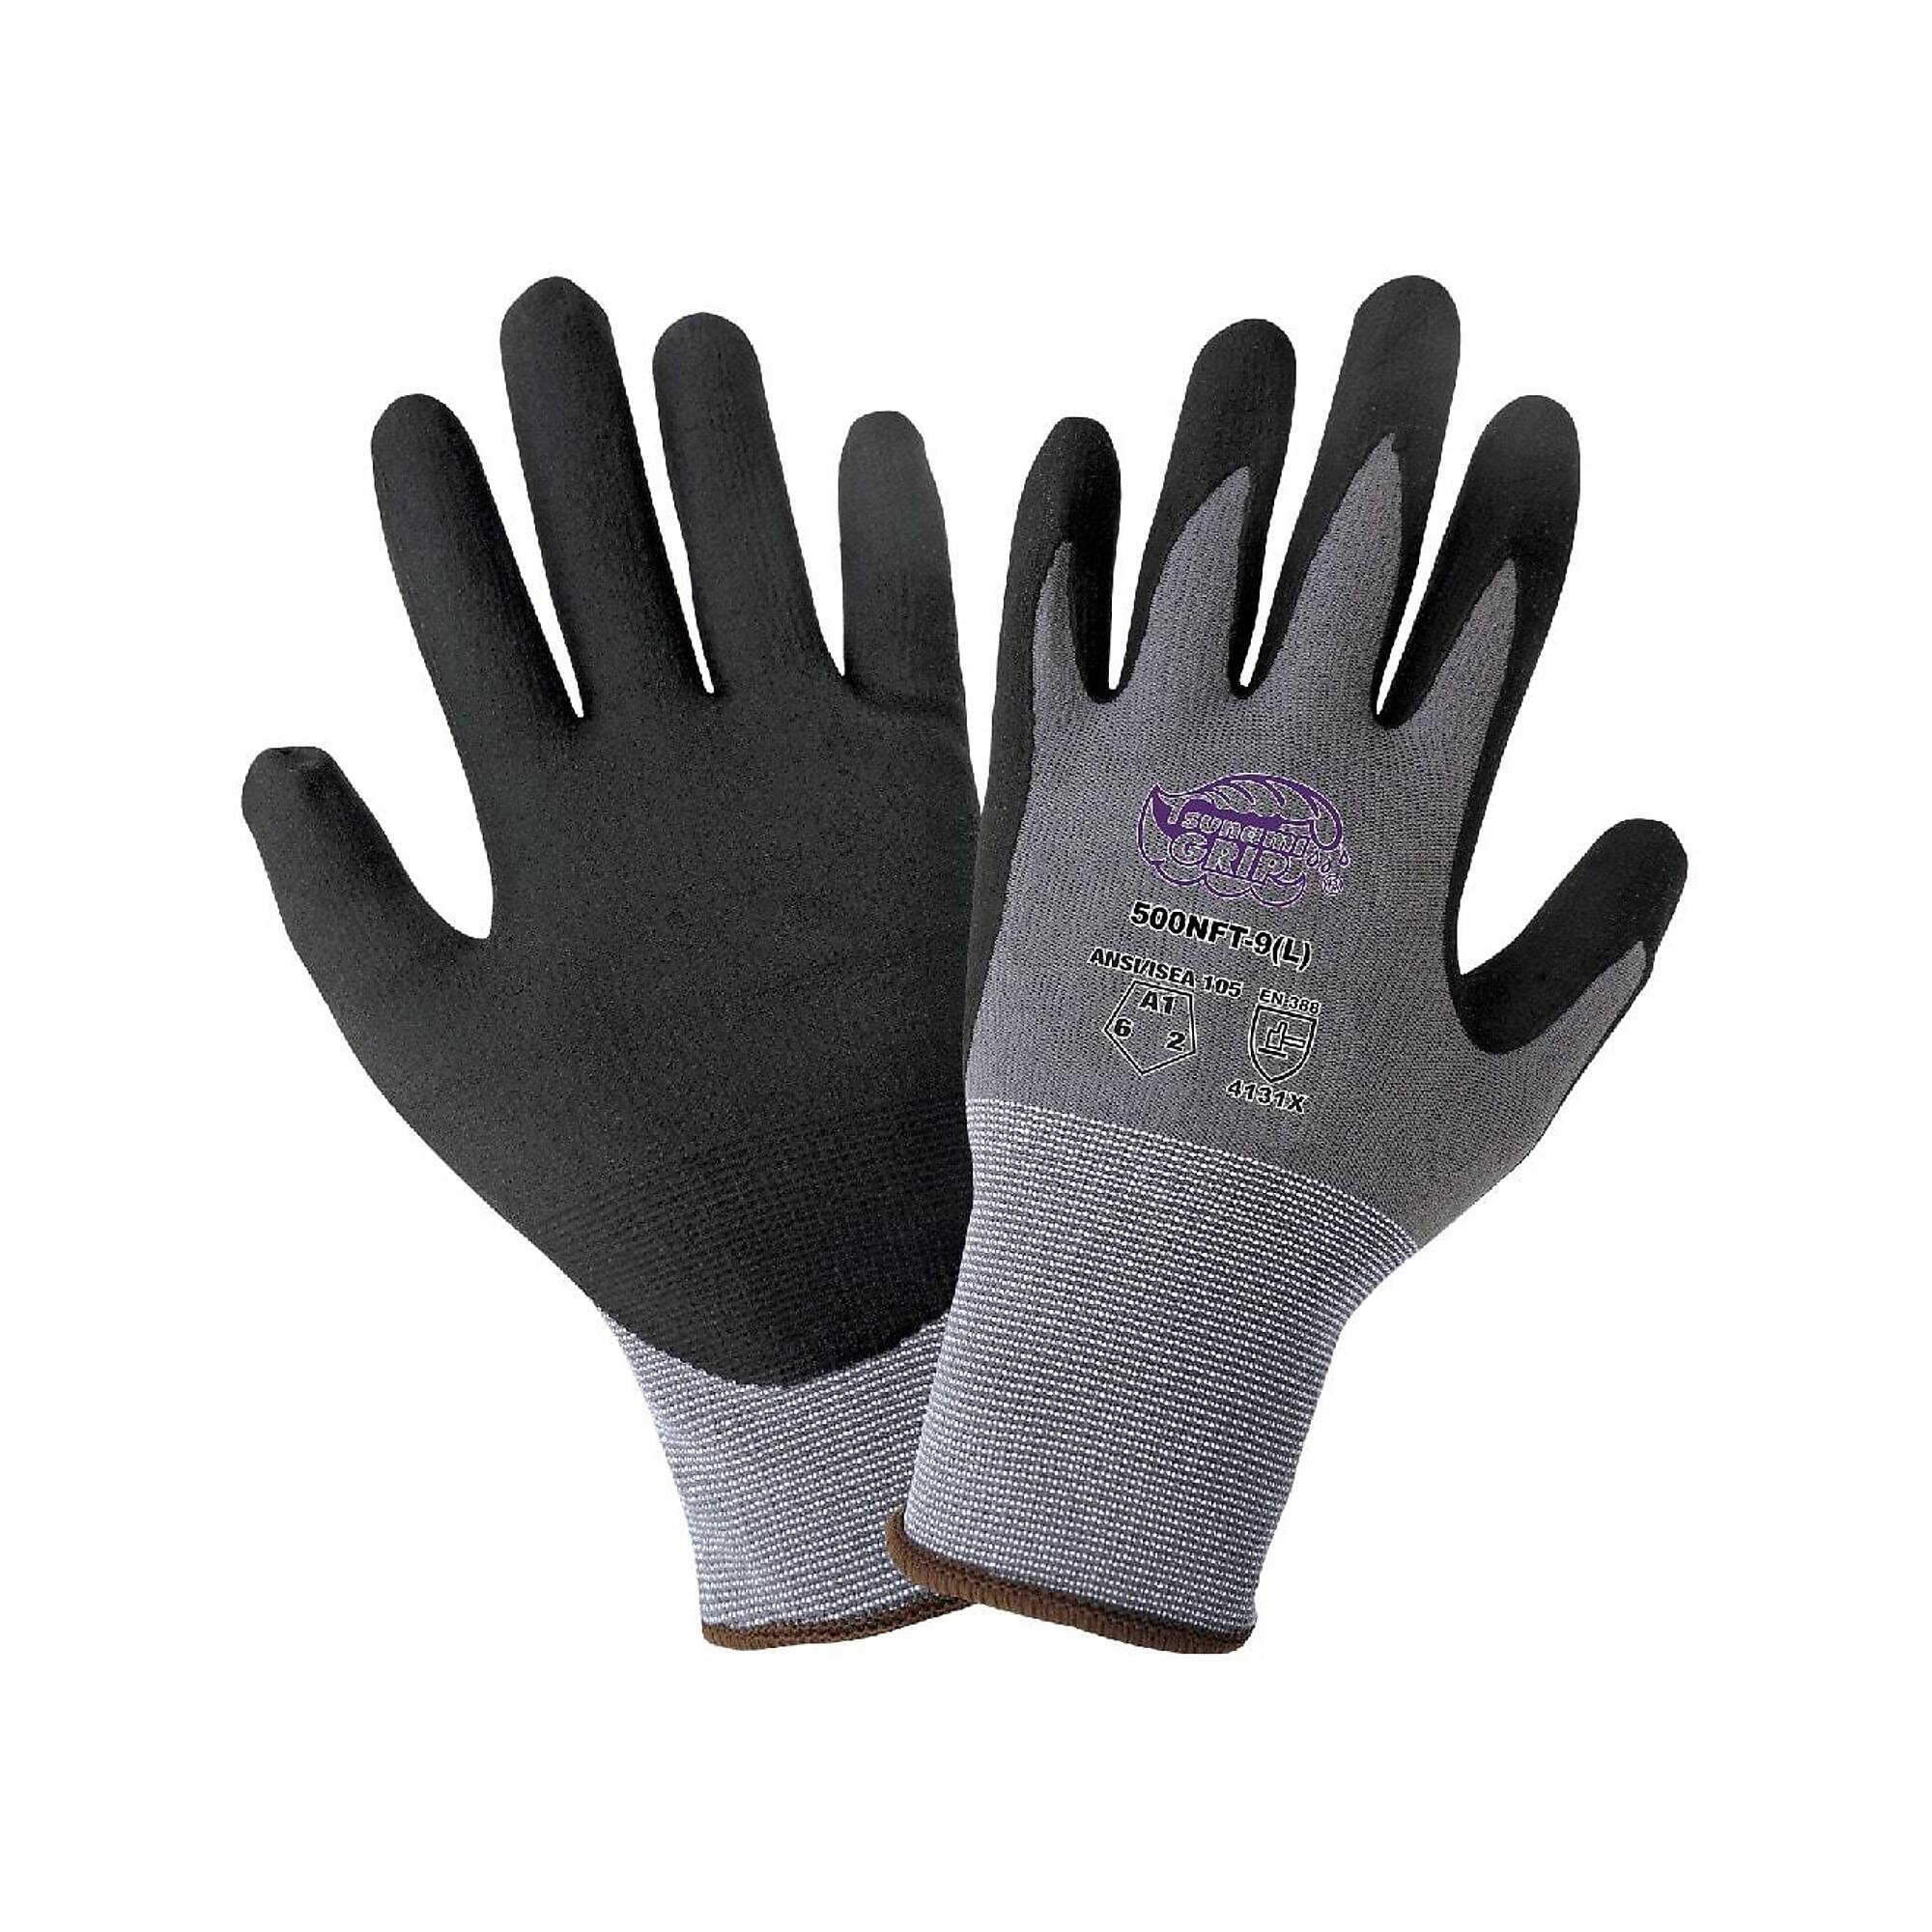 Global Glove Tsunami Grip , Gray, Black Nitrile Foam Palm, Cut Resist A1 Gloves- 12 Pair, Size XL, Color Gray/Black, Included (qty.) 12 Model 500NFT-